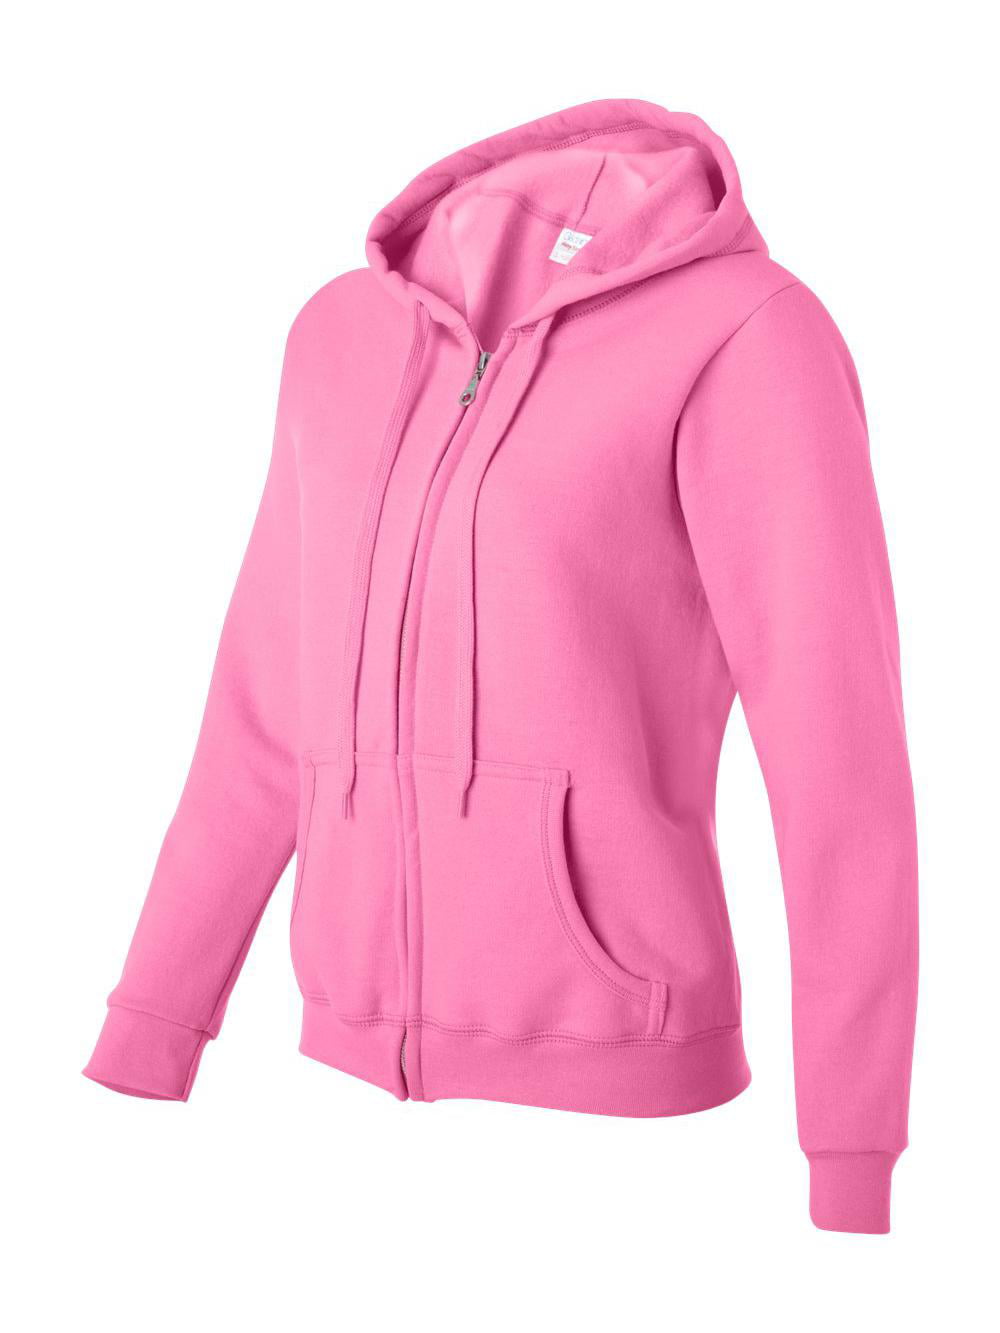 Gildan Heavy Blend Missy Fit Full-Zip Hooded Sweatshirt Women's Hoodie 18600FL